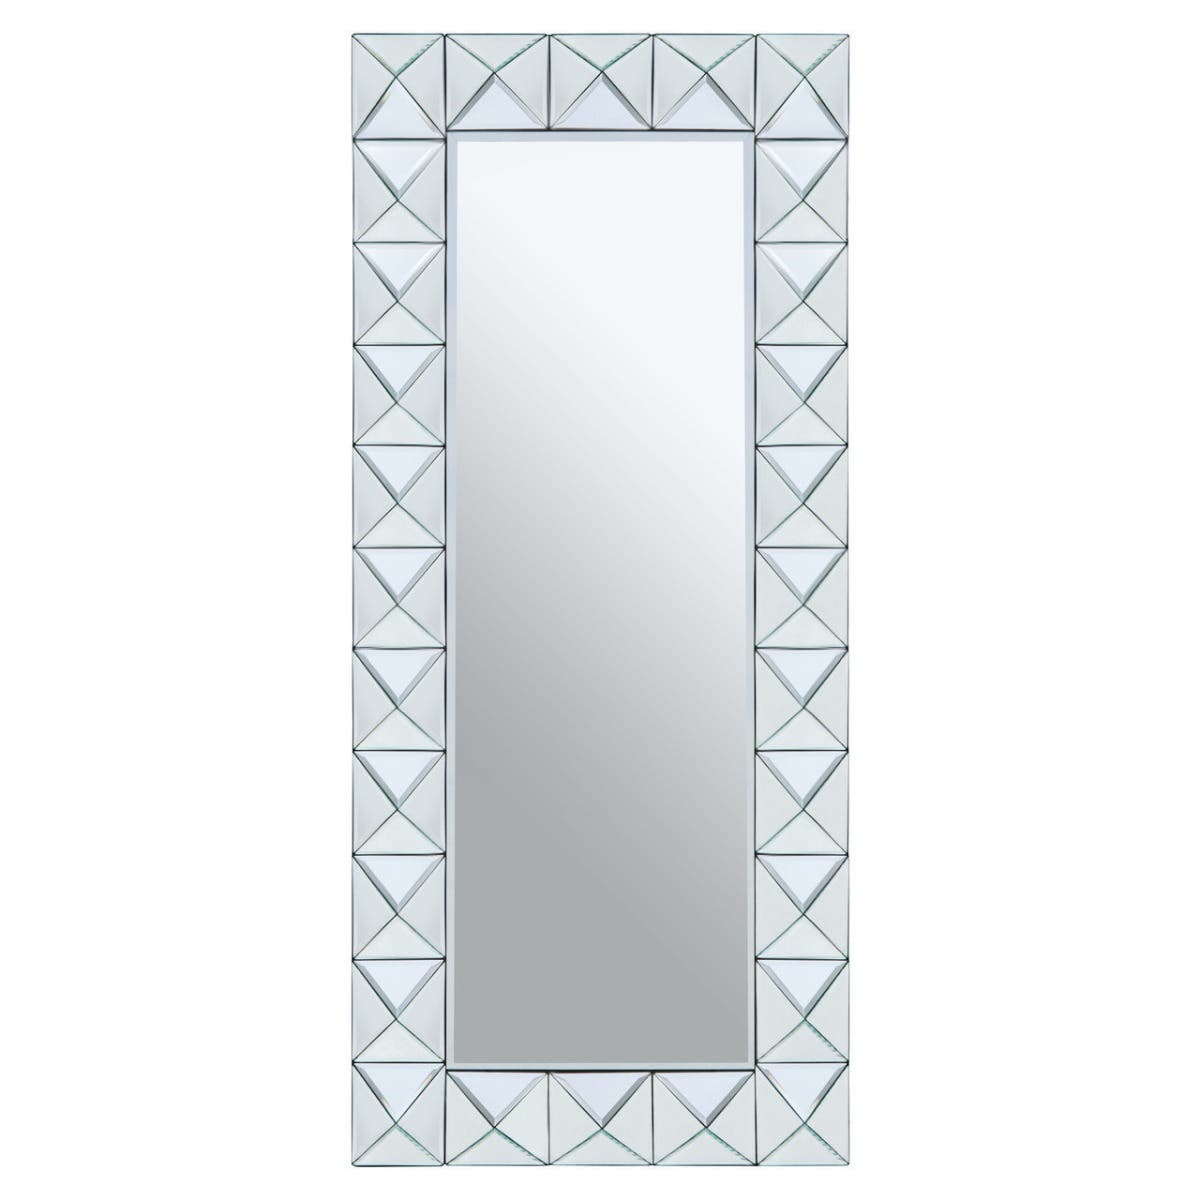 Yula Pyramid Edged Wall Mirror